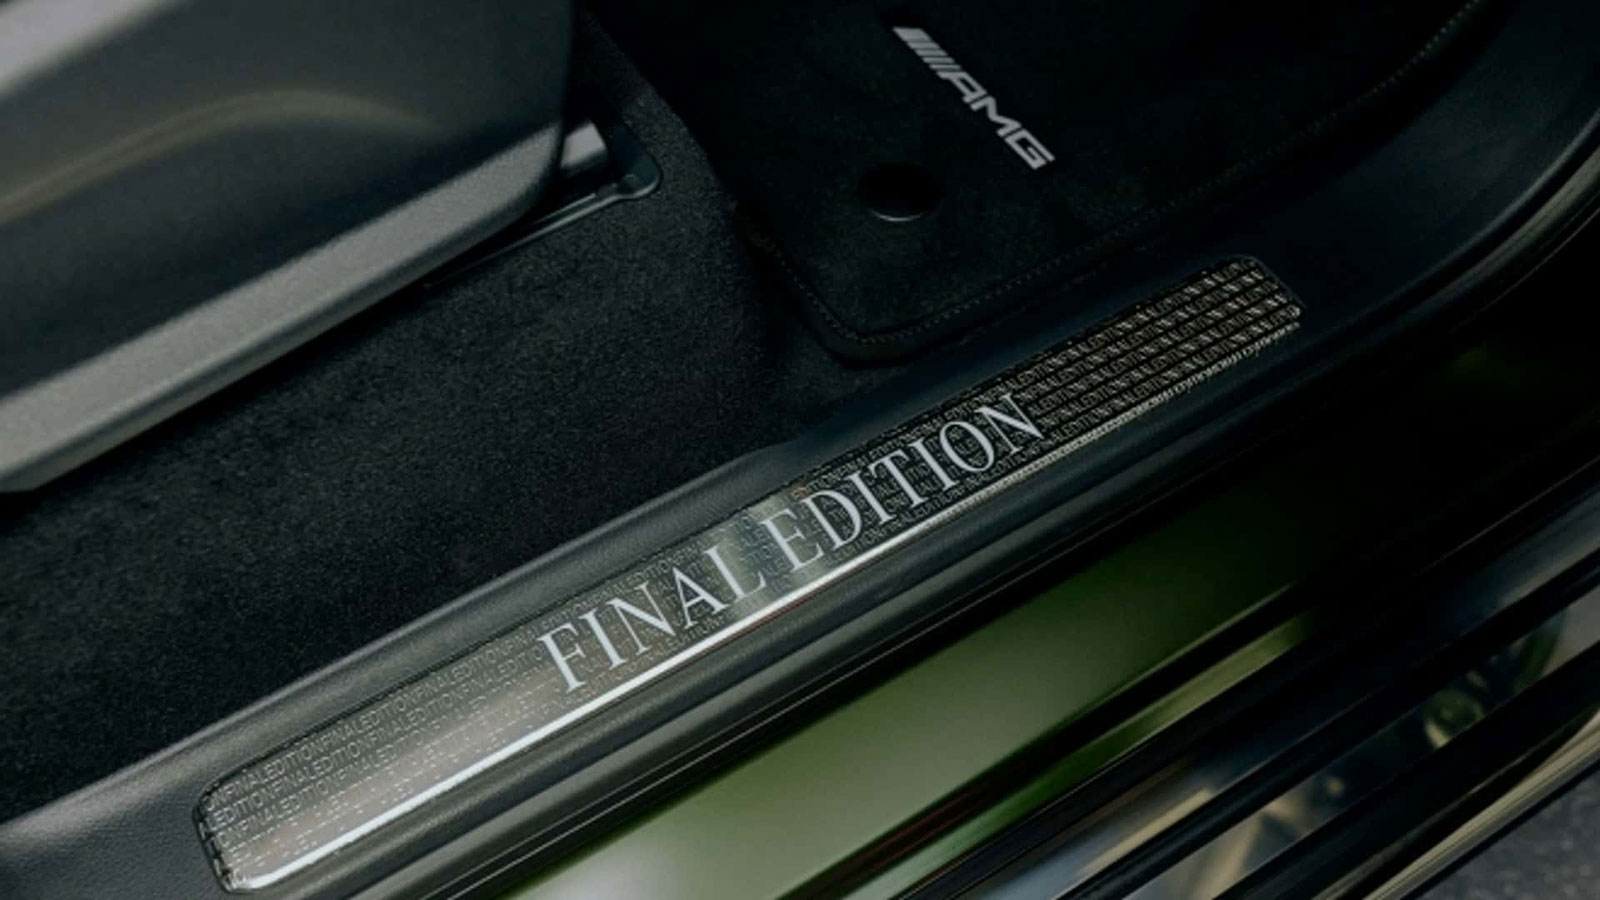 Mercedes: Νέες ειδικές εκδόσεις για τις G 500 και G 63